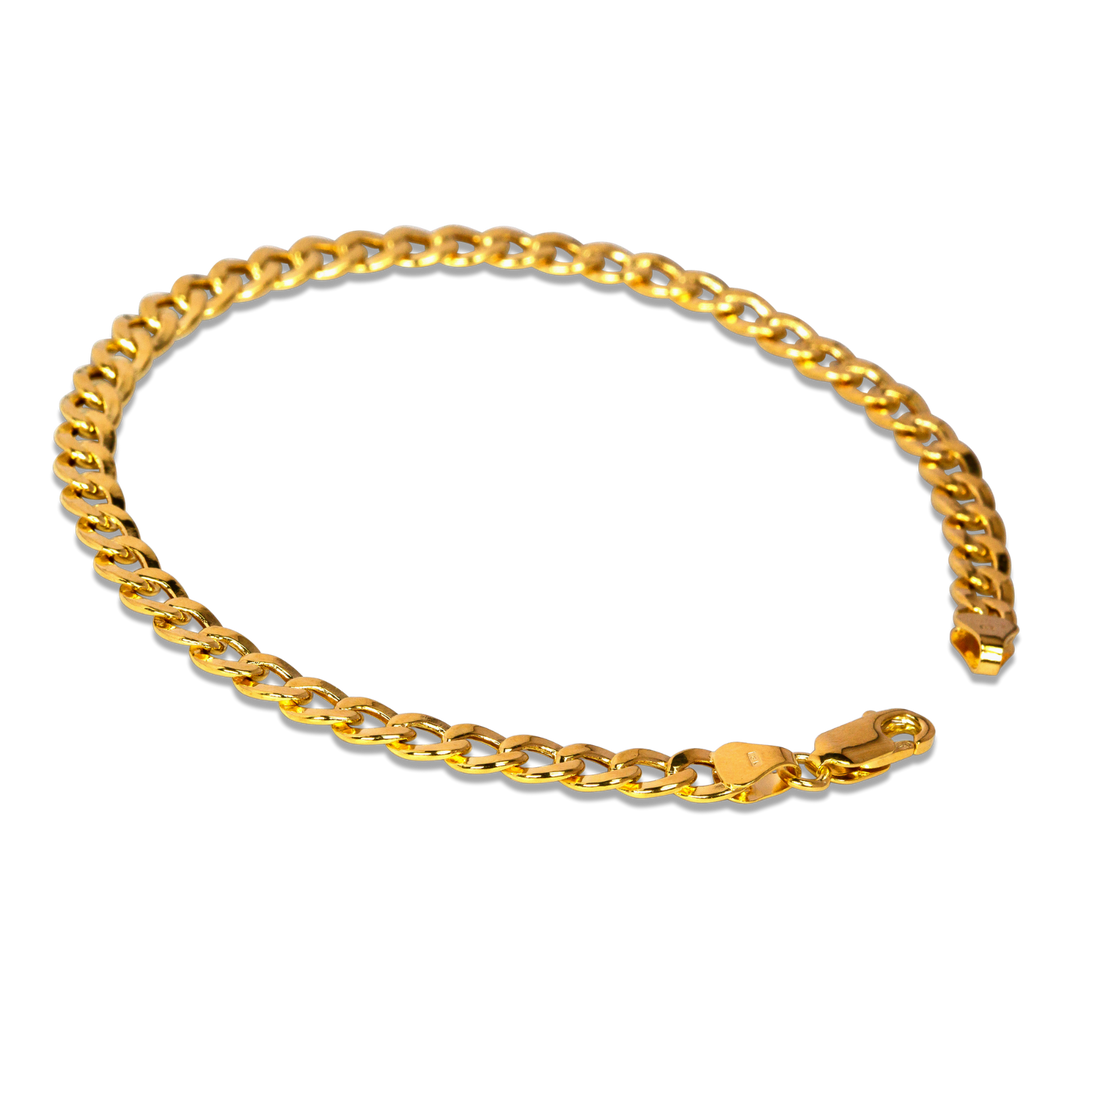 gold bracelet for men, mens gold bracelets canada, gold bracelet canada, 10k gold bracelet canada, 14k gold bracelet canada